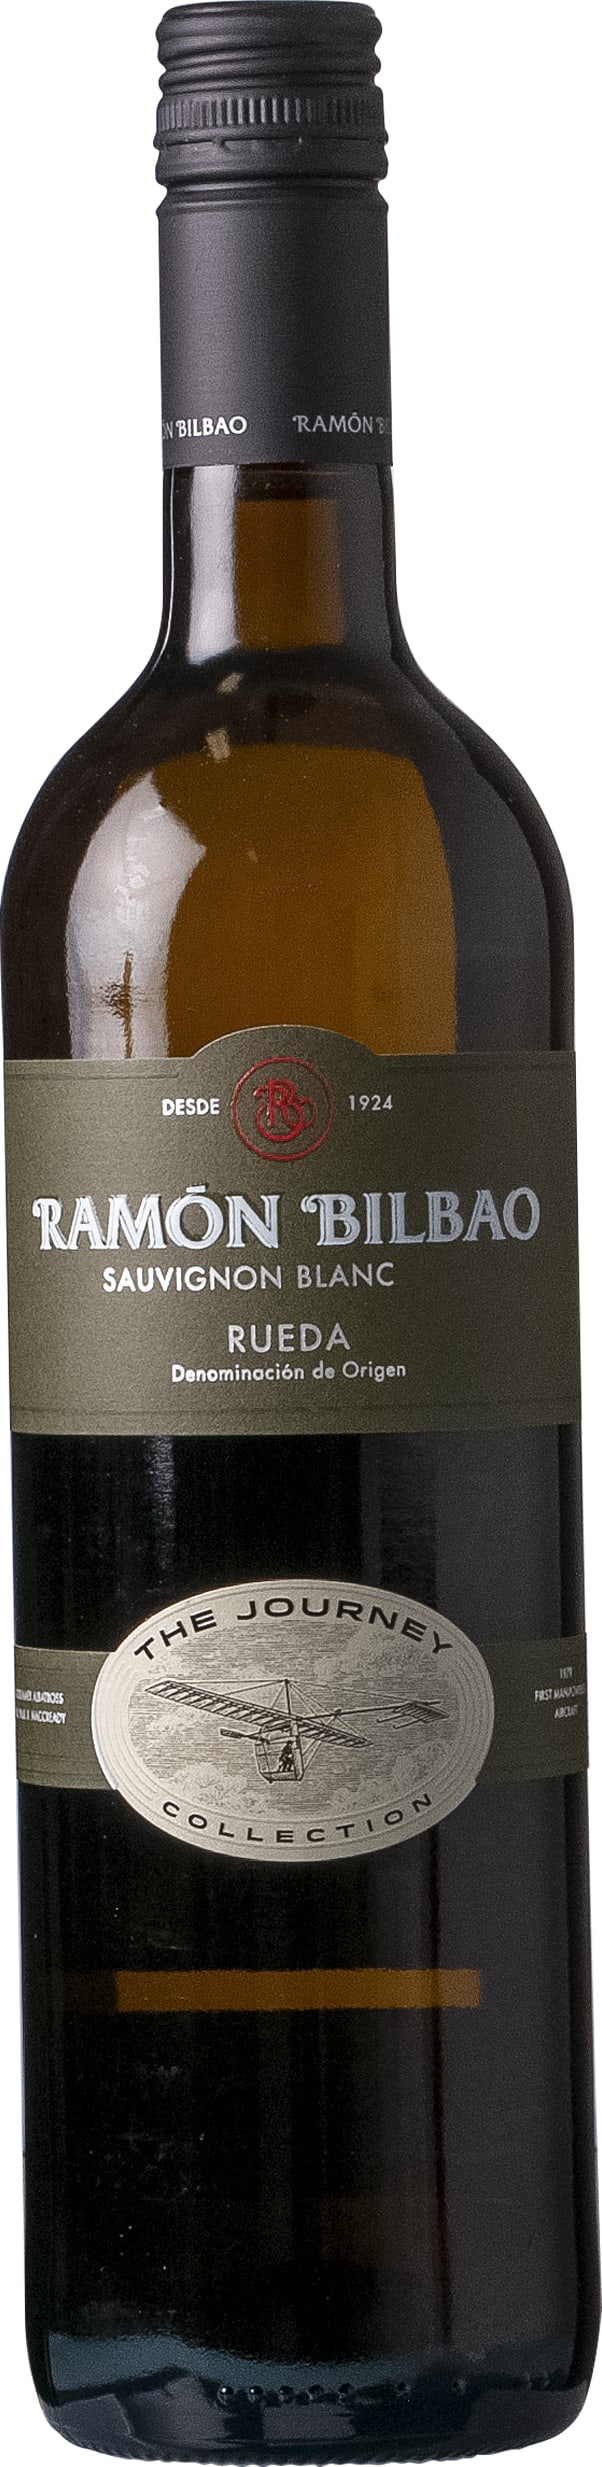 Ramon Bilbao Journey Collection Sauvignon Blanc 2022 75cl - Buy Ramon Bilbao Wines from GREAT WINES DIRECT wine shop